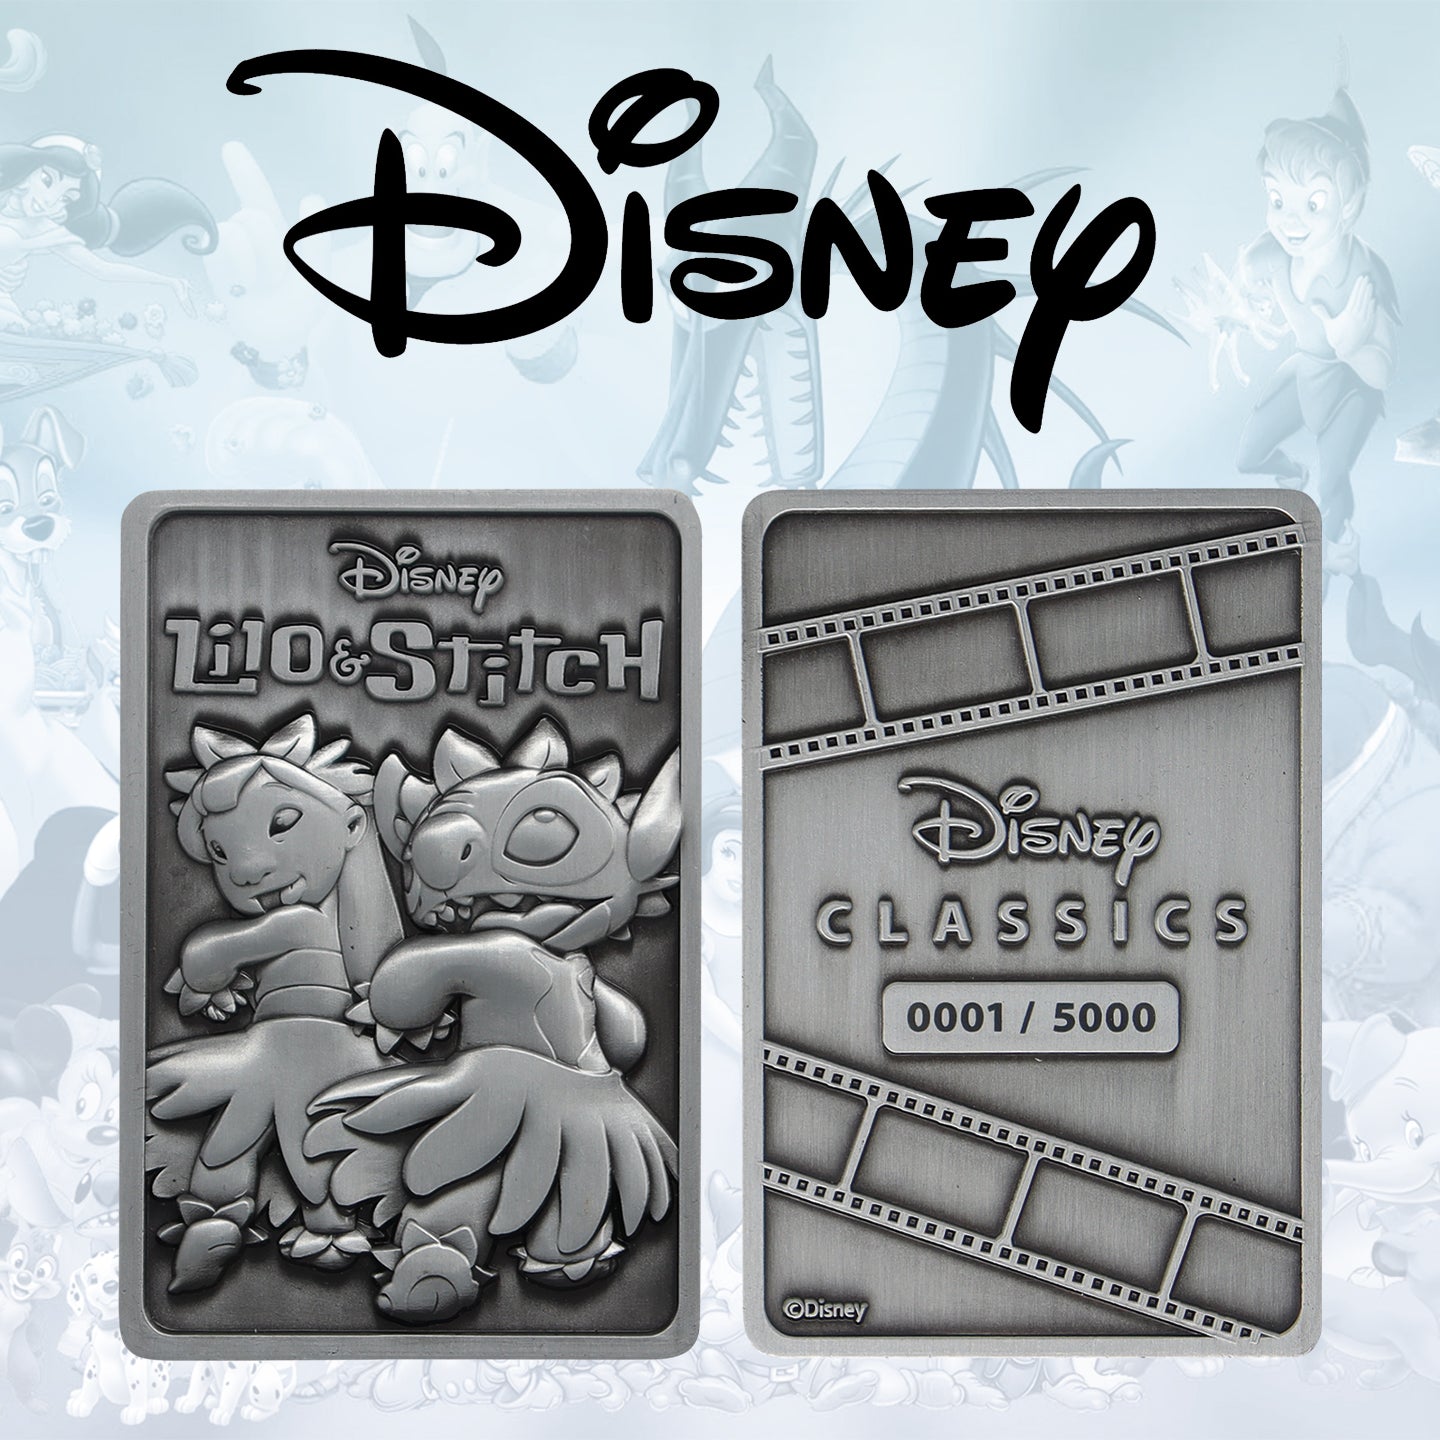 Disney Limited Edition Lilo & Stitch Ingot